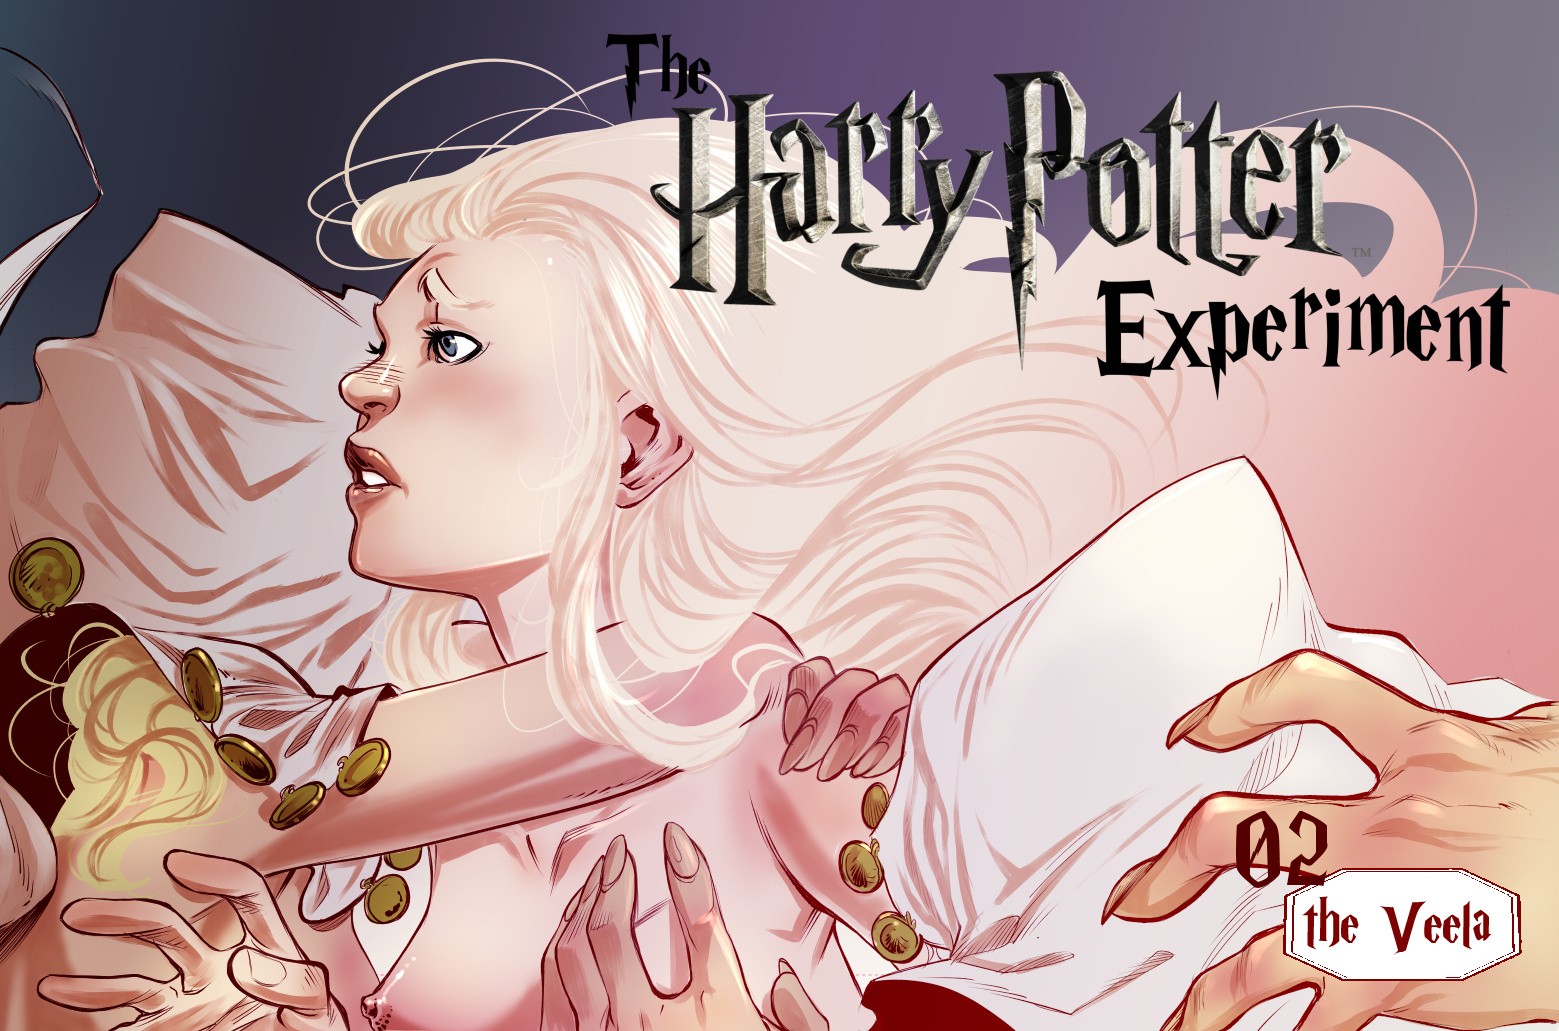 Harry Potter Experience 2 : The Veela